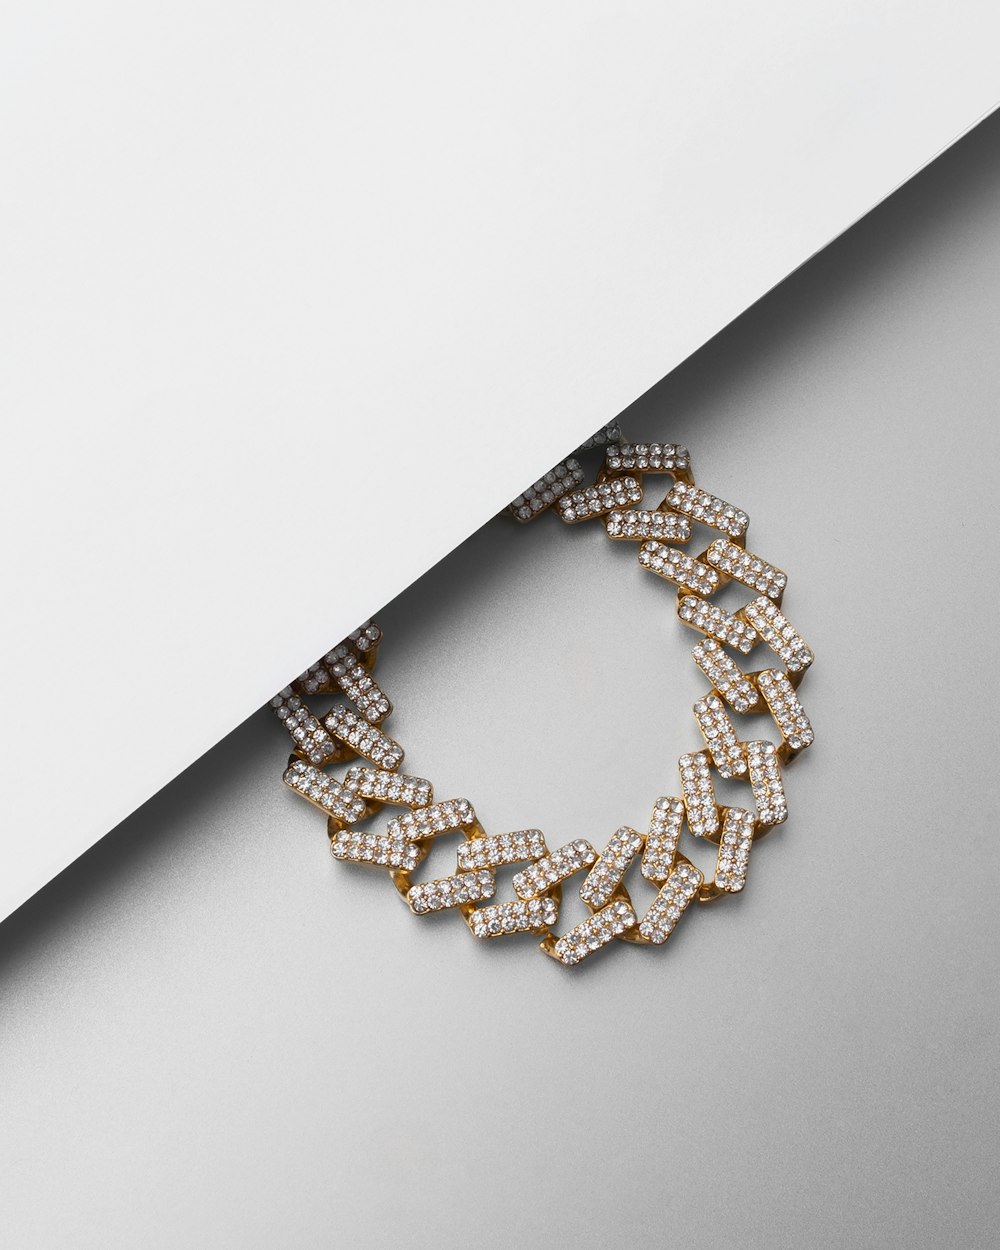 a gold and diamond bracelet on a white surface